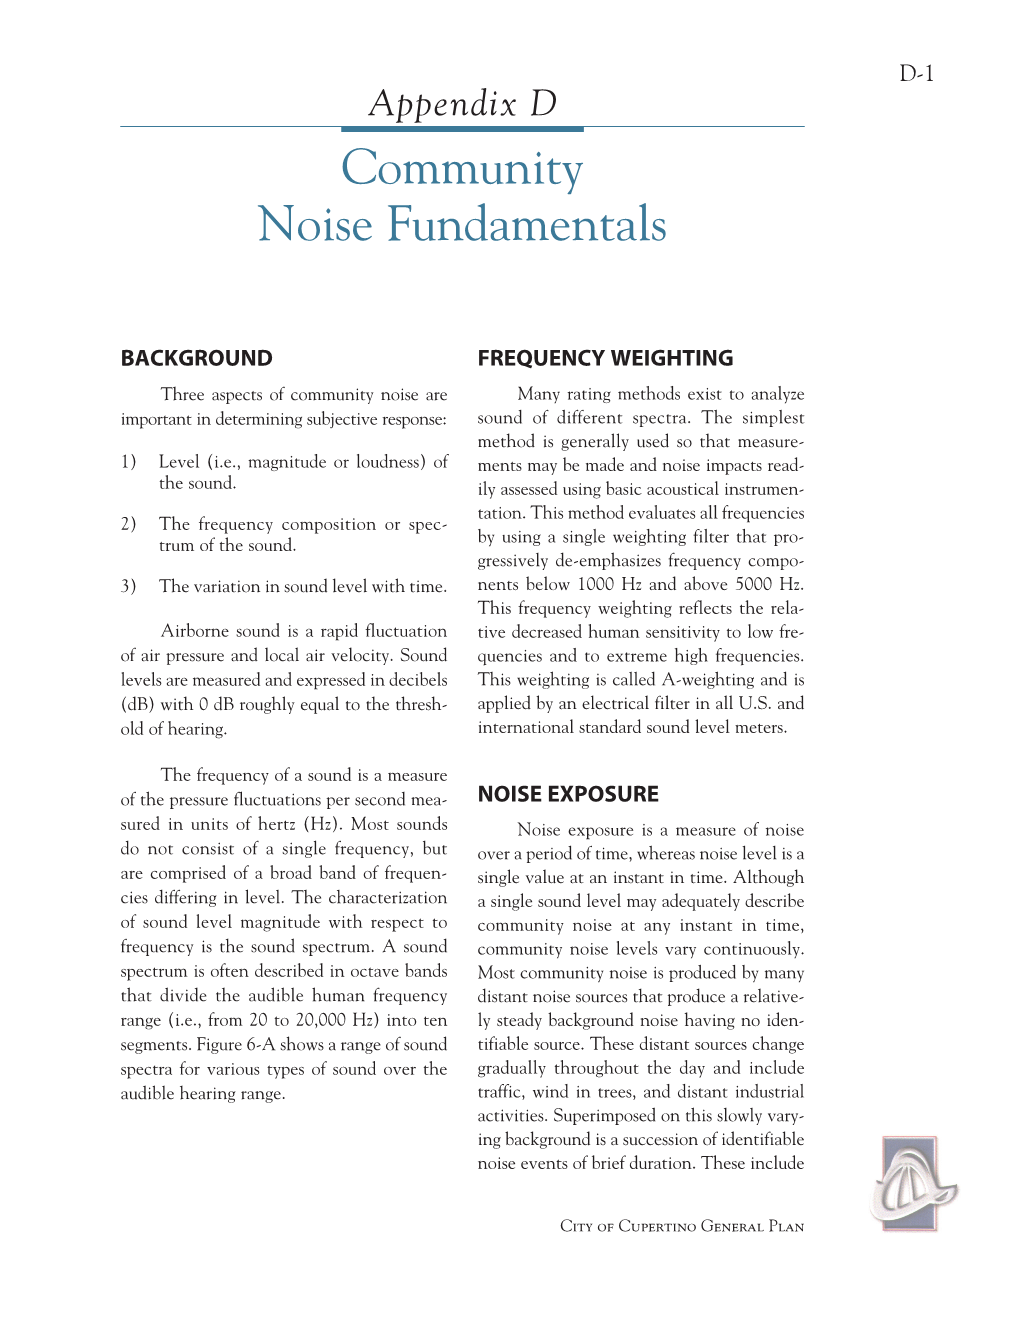 Community Noise Fundamentals